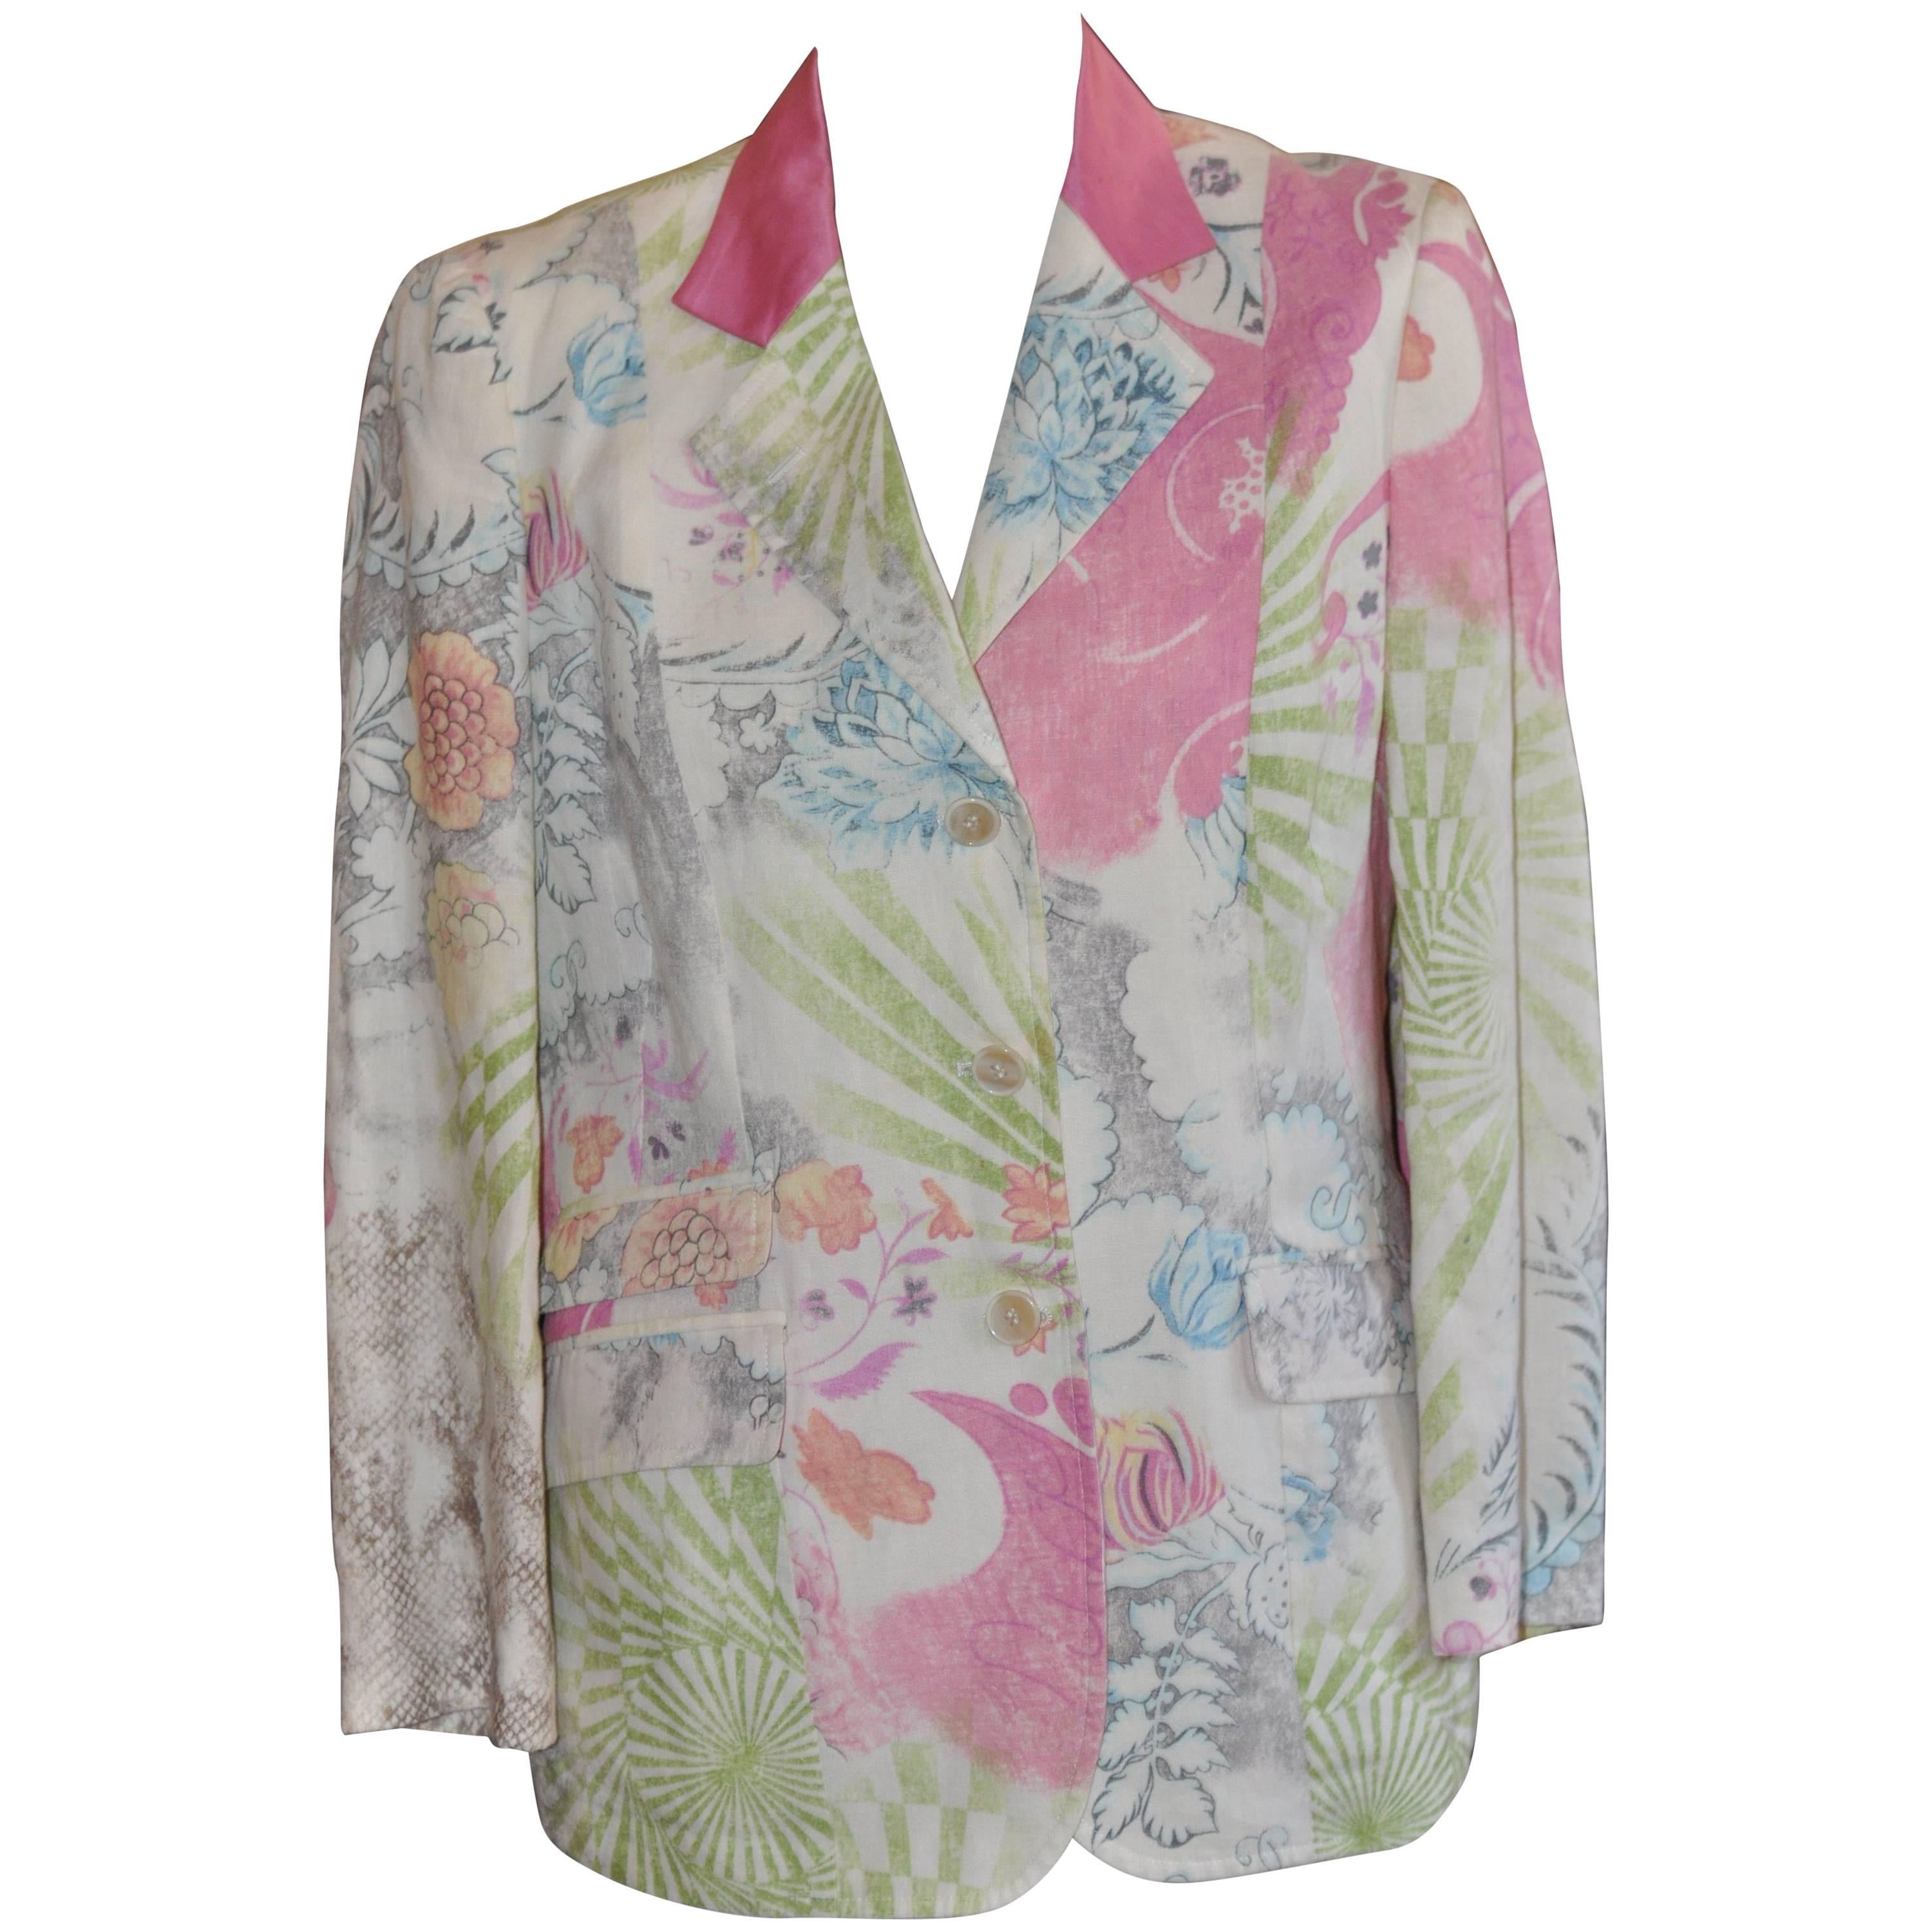 Etro Linen Paisley Floral Snakeskin Print Jacket 48 (Itl)